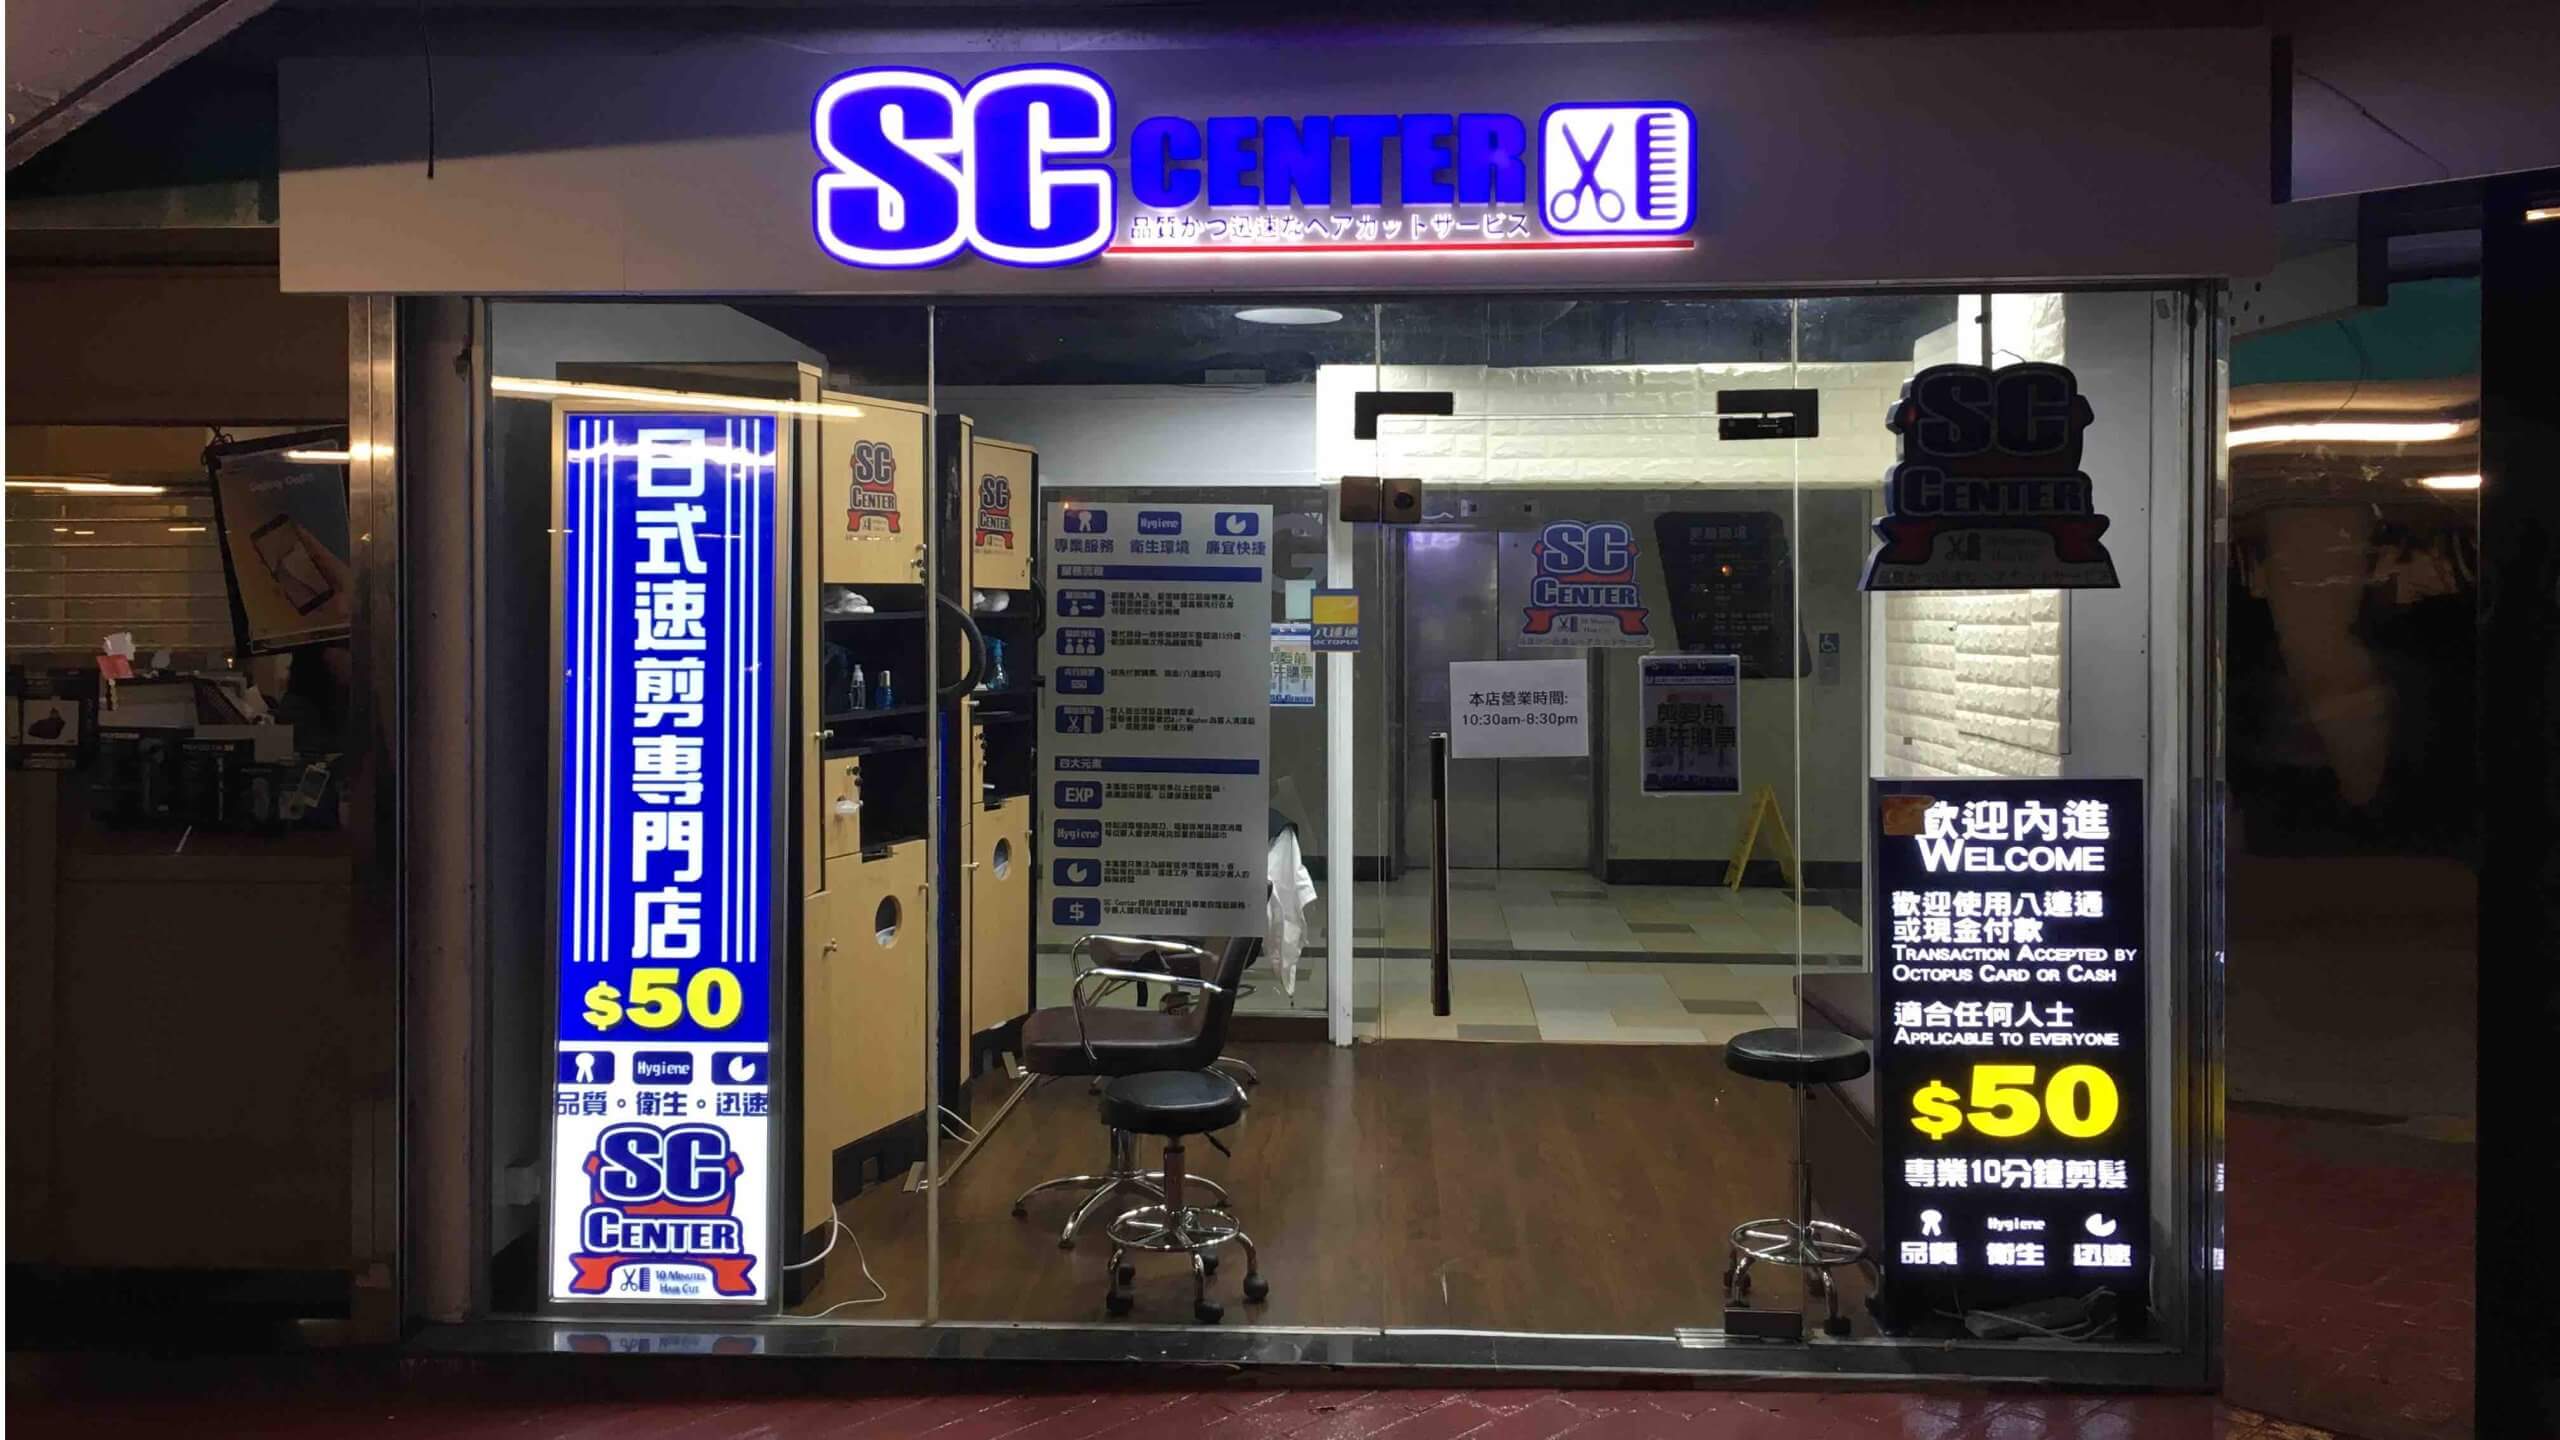 SC Center的特許經營香港區加盟店項目5